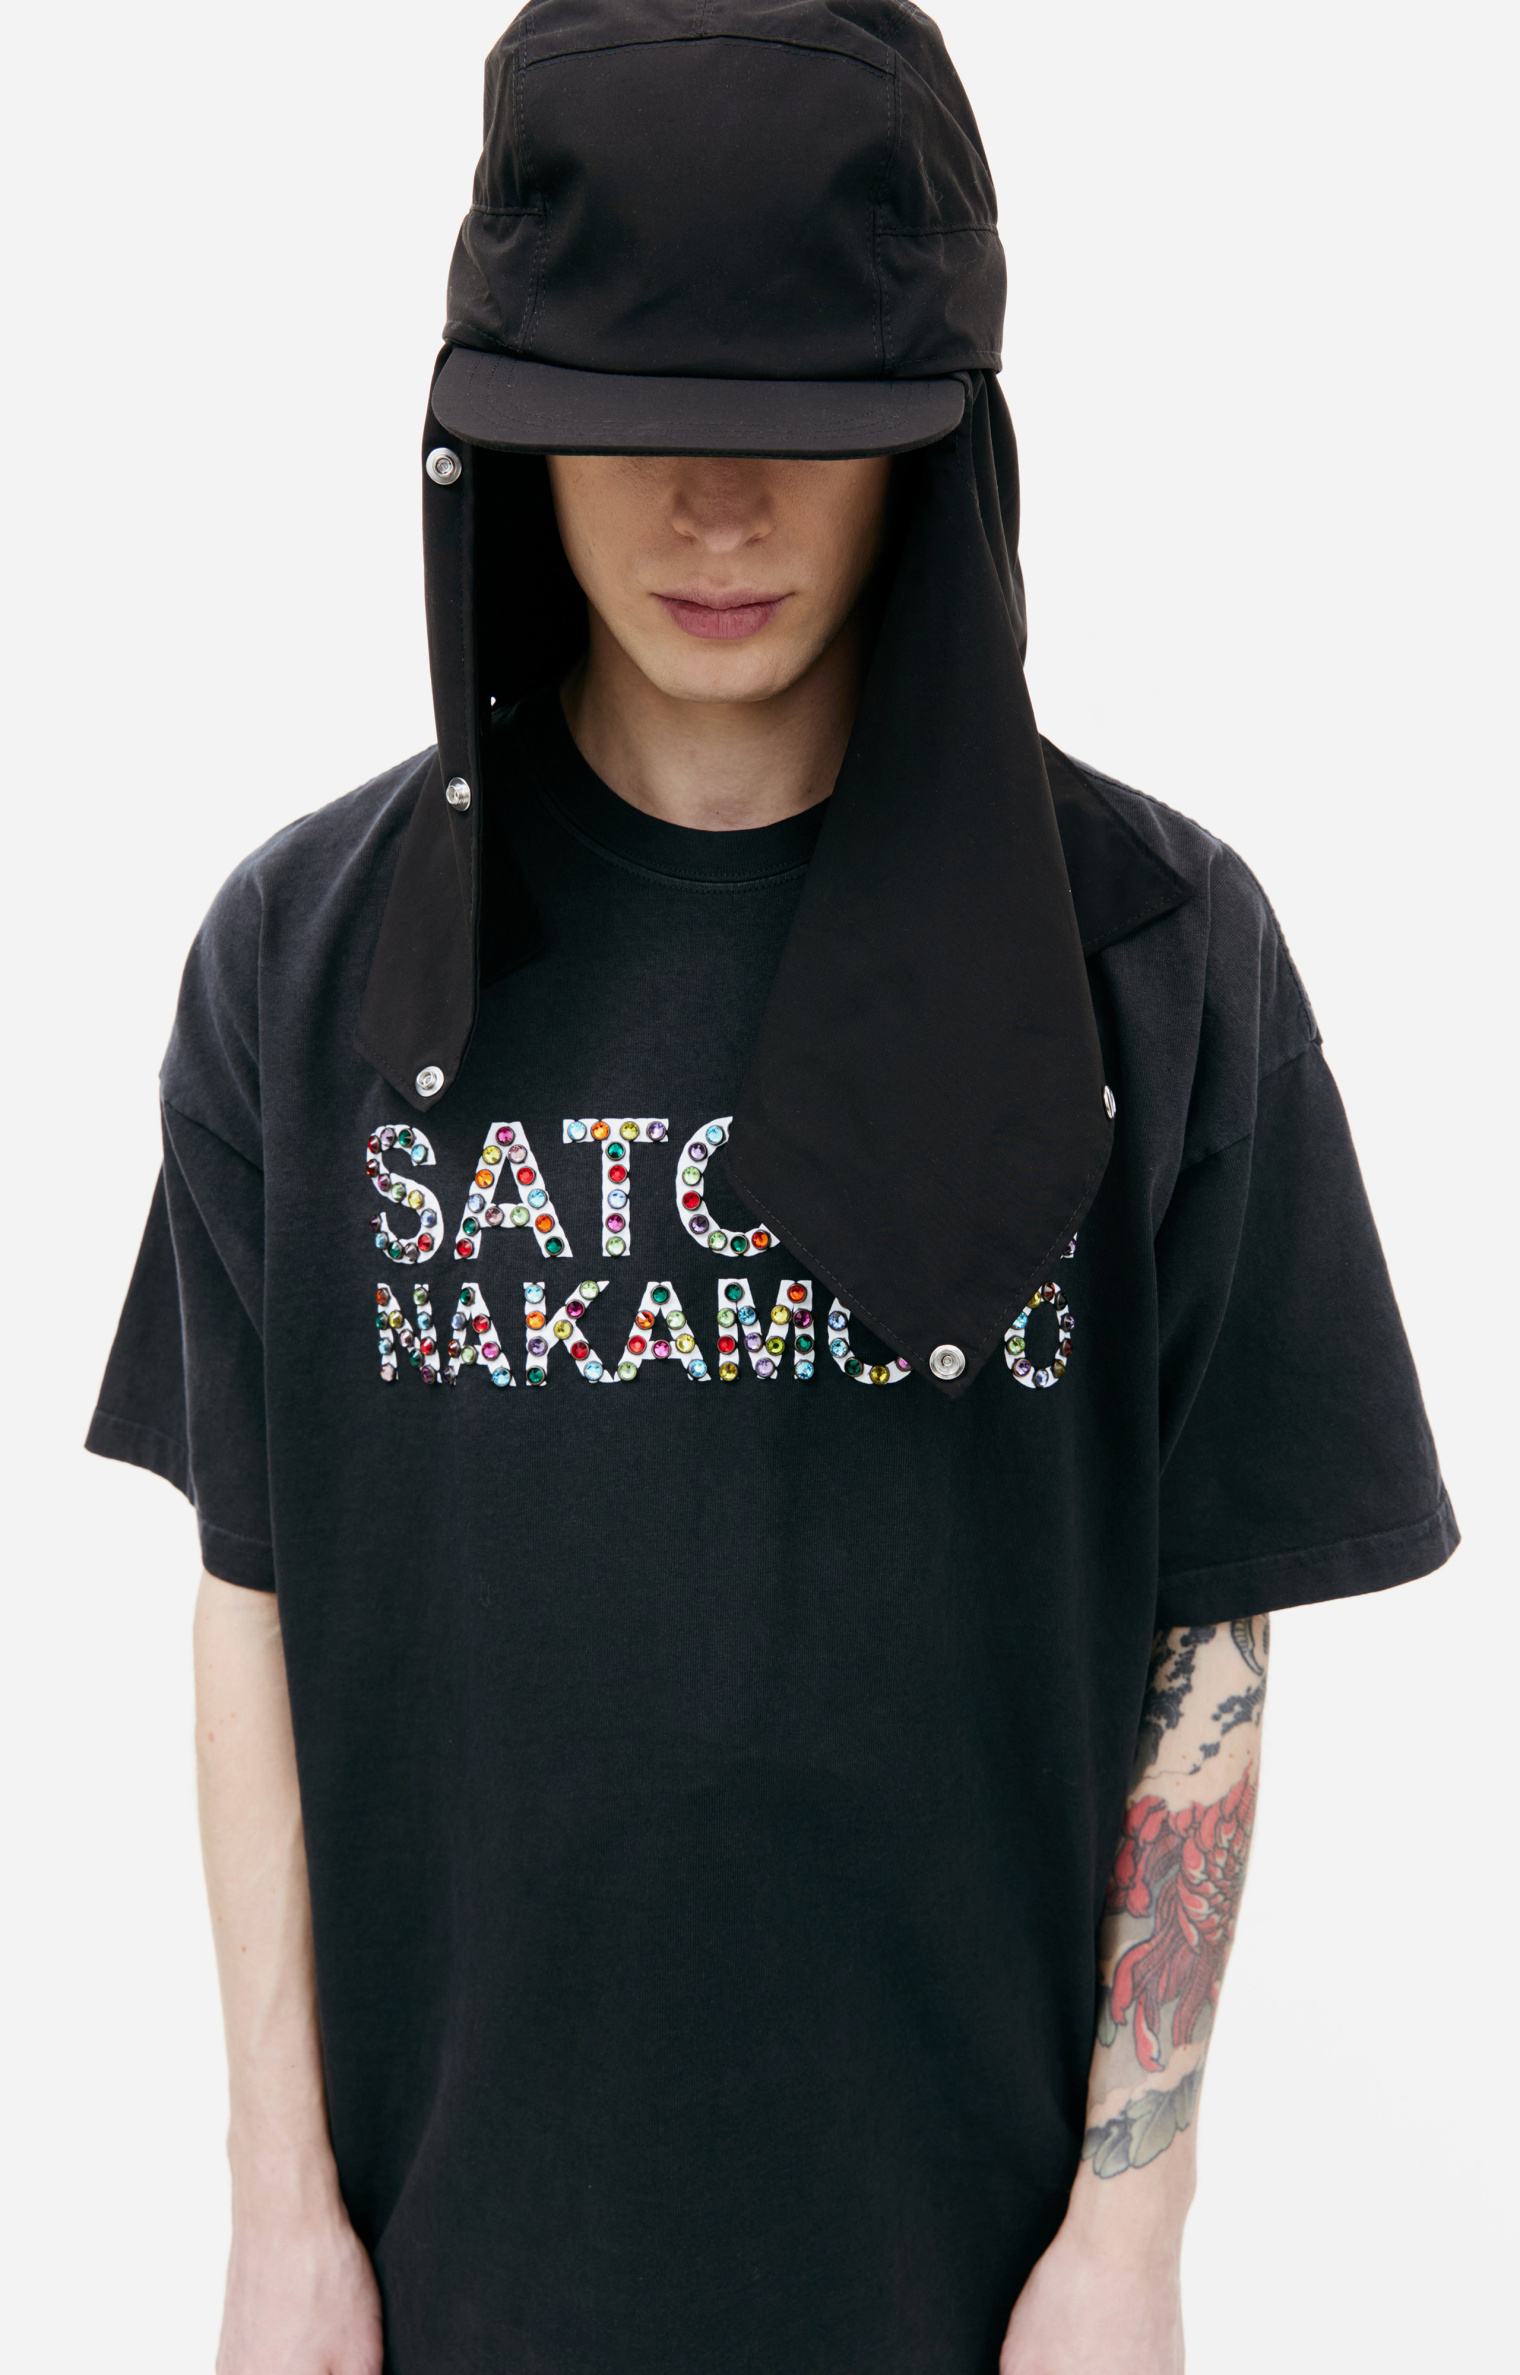 Satoshi Nakamoto Crystal-cut logo t-shirt